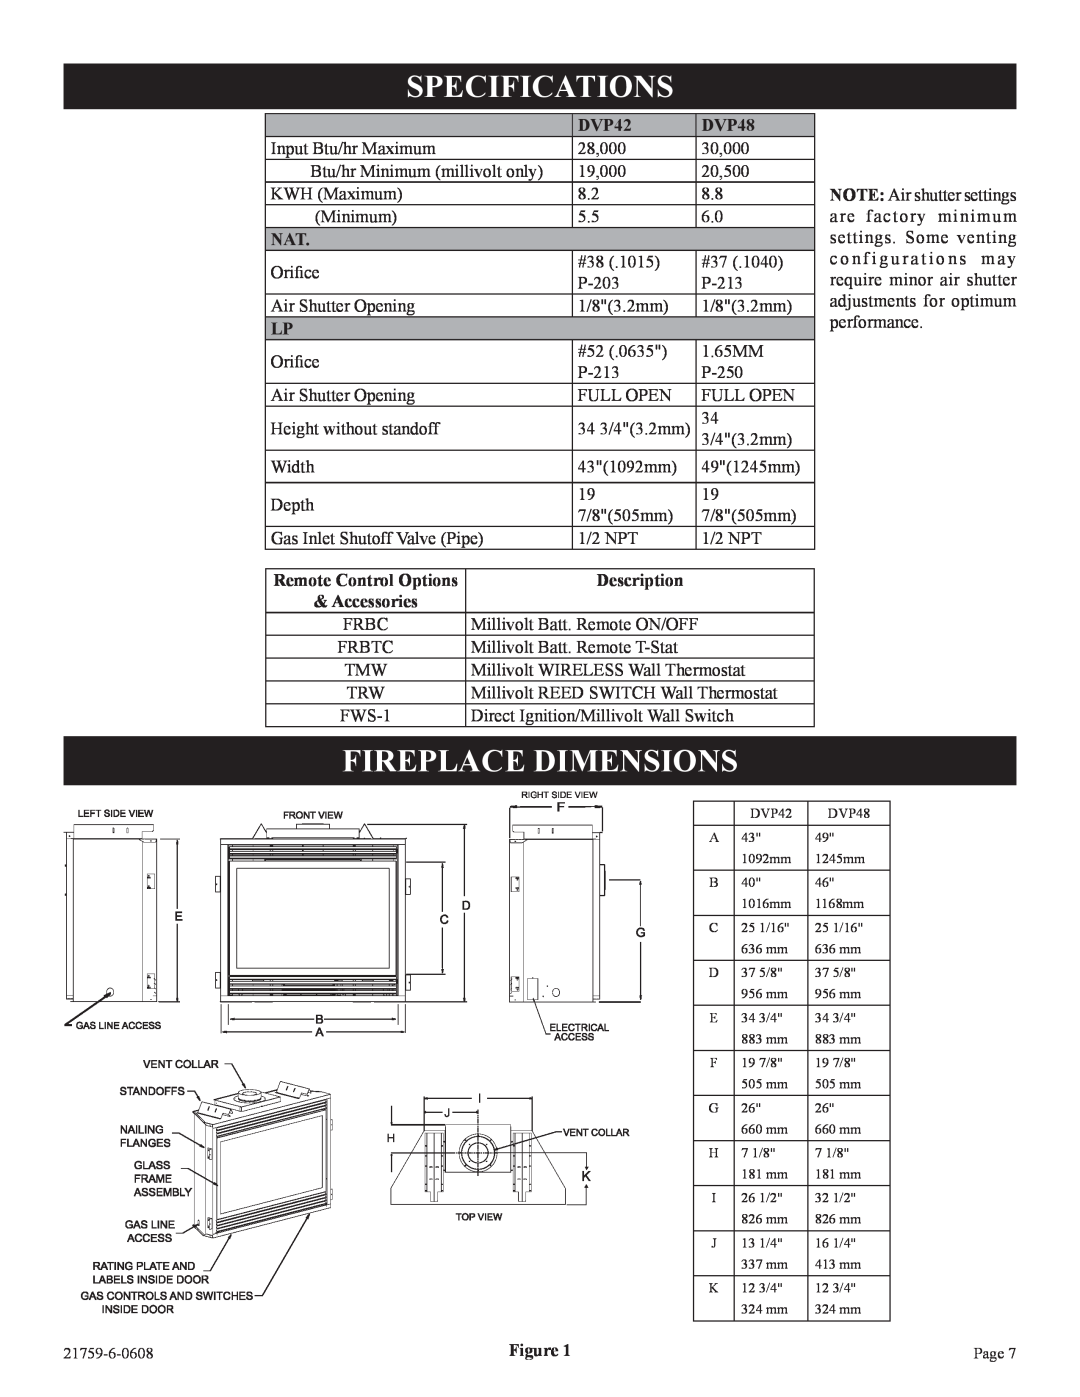 Empire Comfort Systems DVP42FP Specifications, Fireplace Dimensions, DVP48, Remote Control Options, Description, Figure 